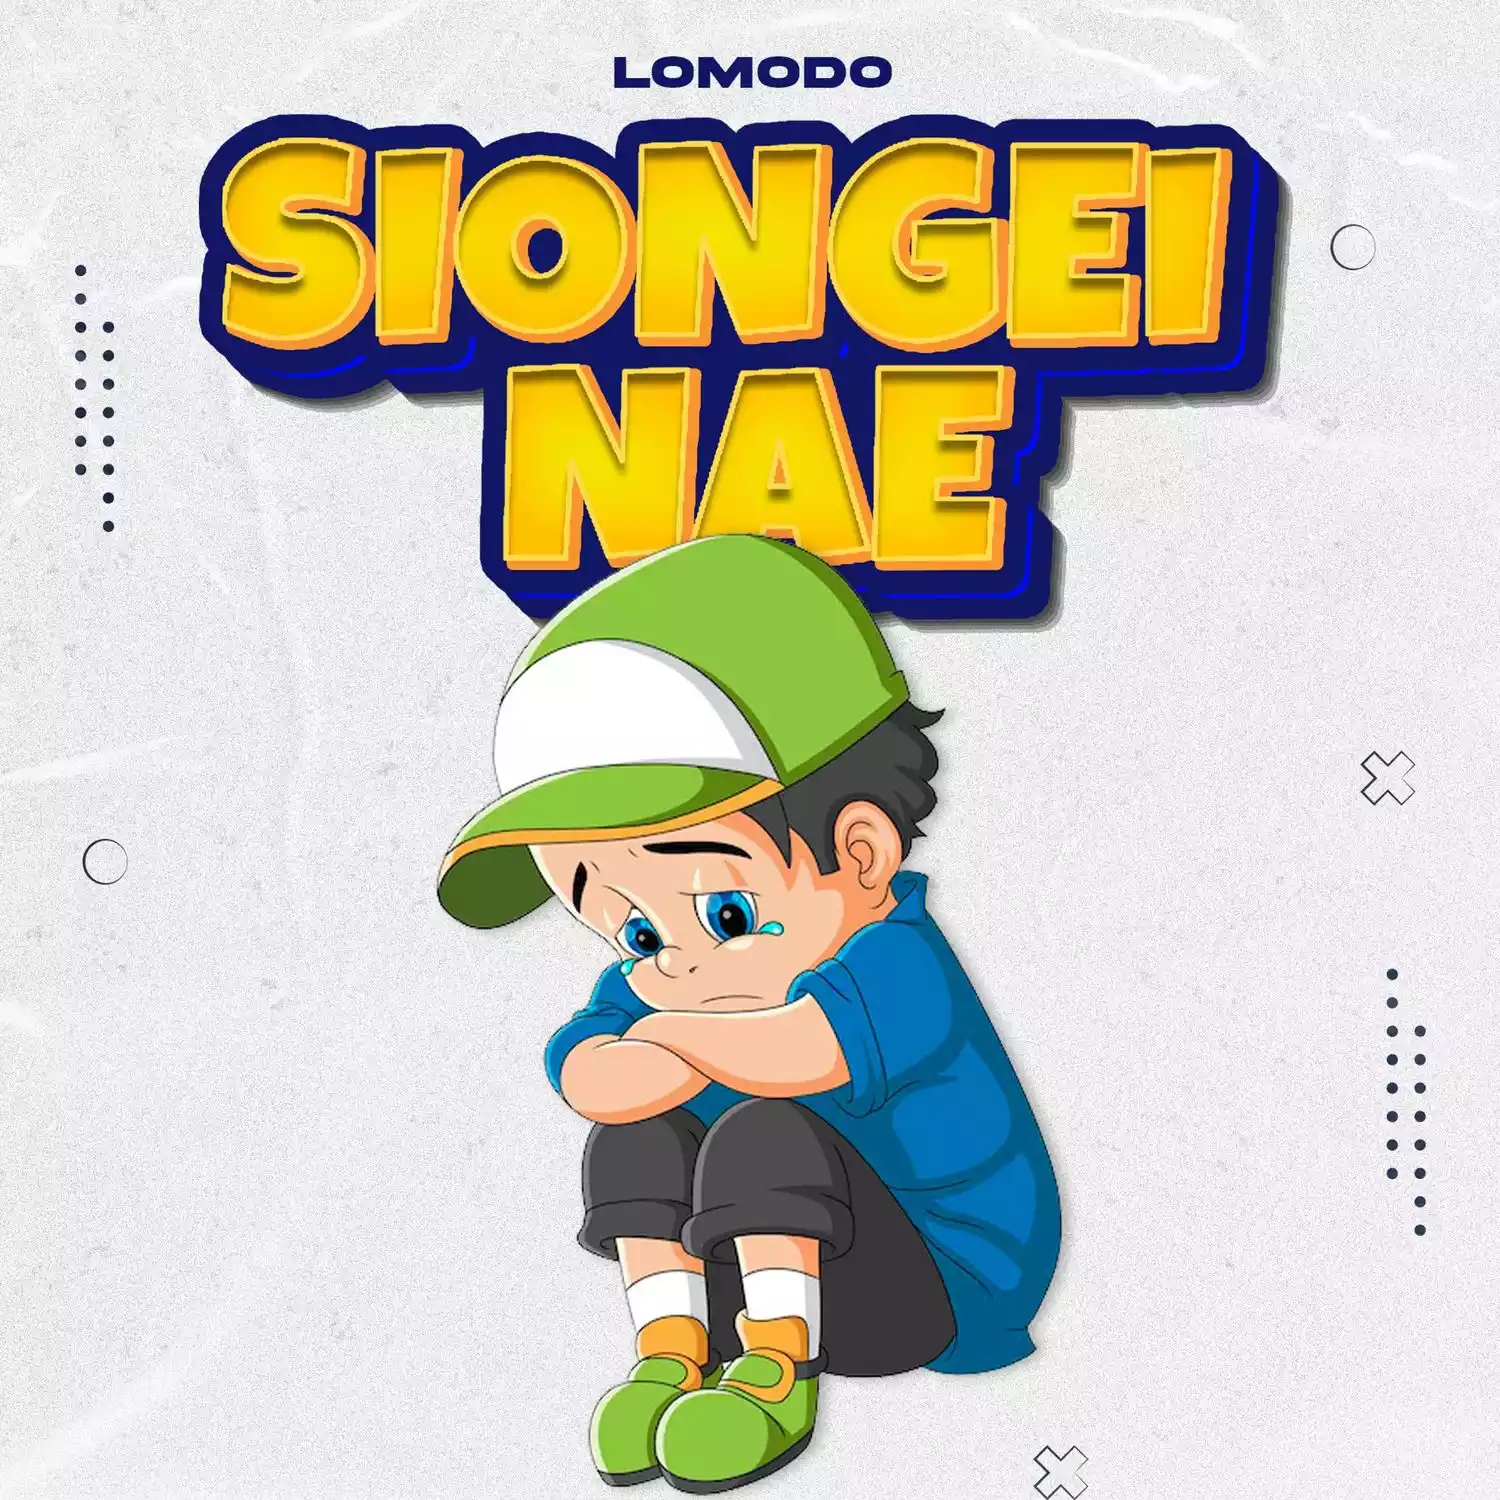 Lomodo Siongei Nae Mp3 Download